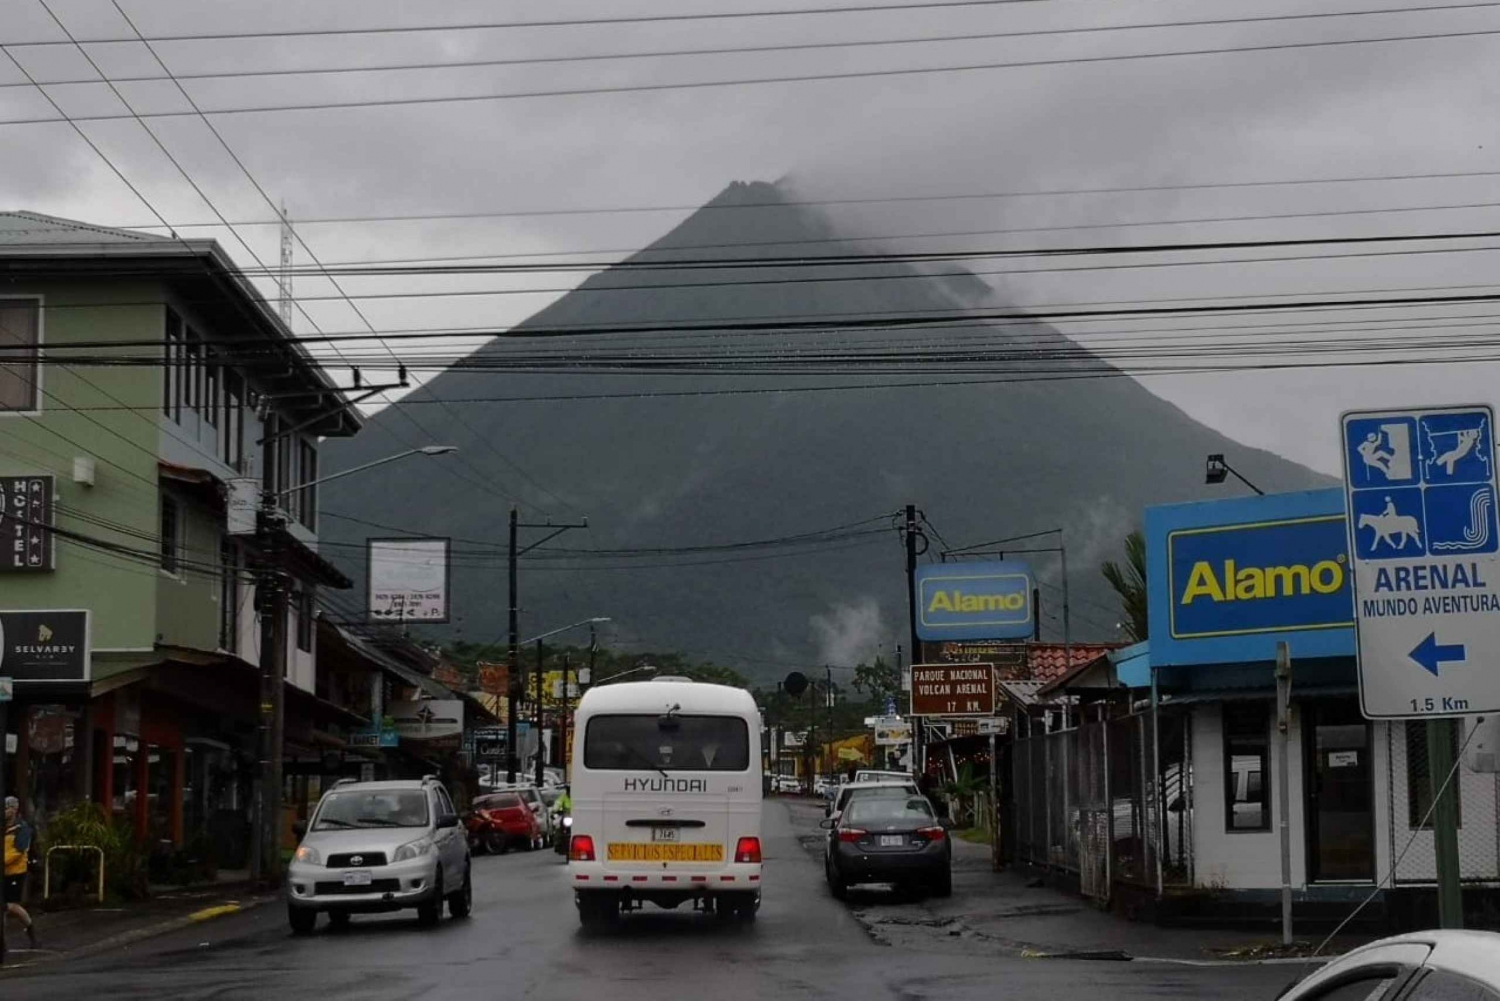 La Fortuna: Transferência panorâmica para Monteverde via Lago Arenal